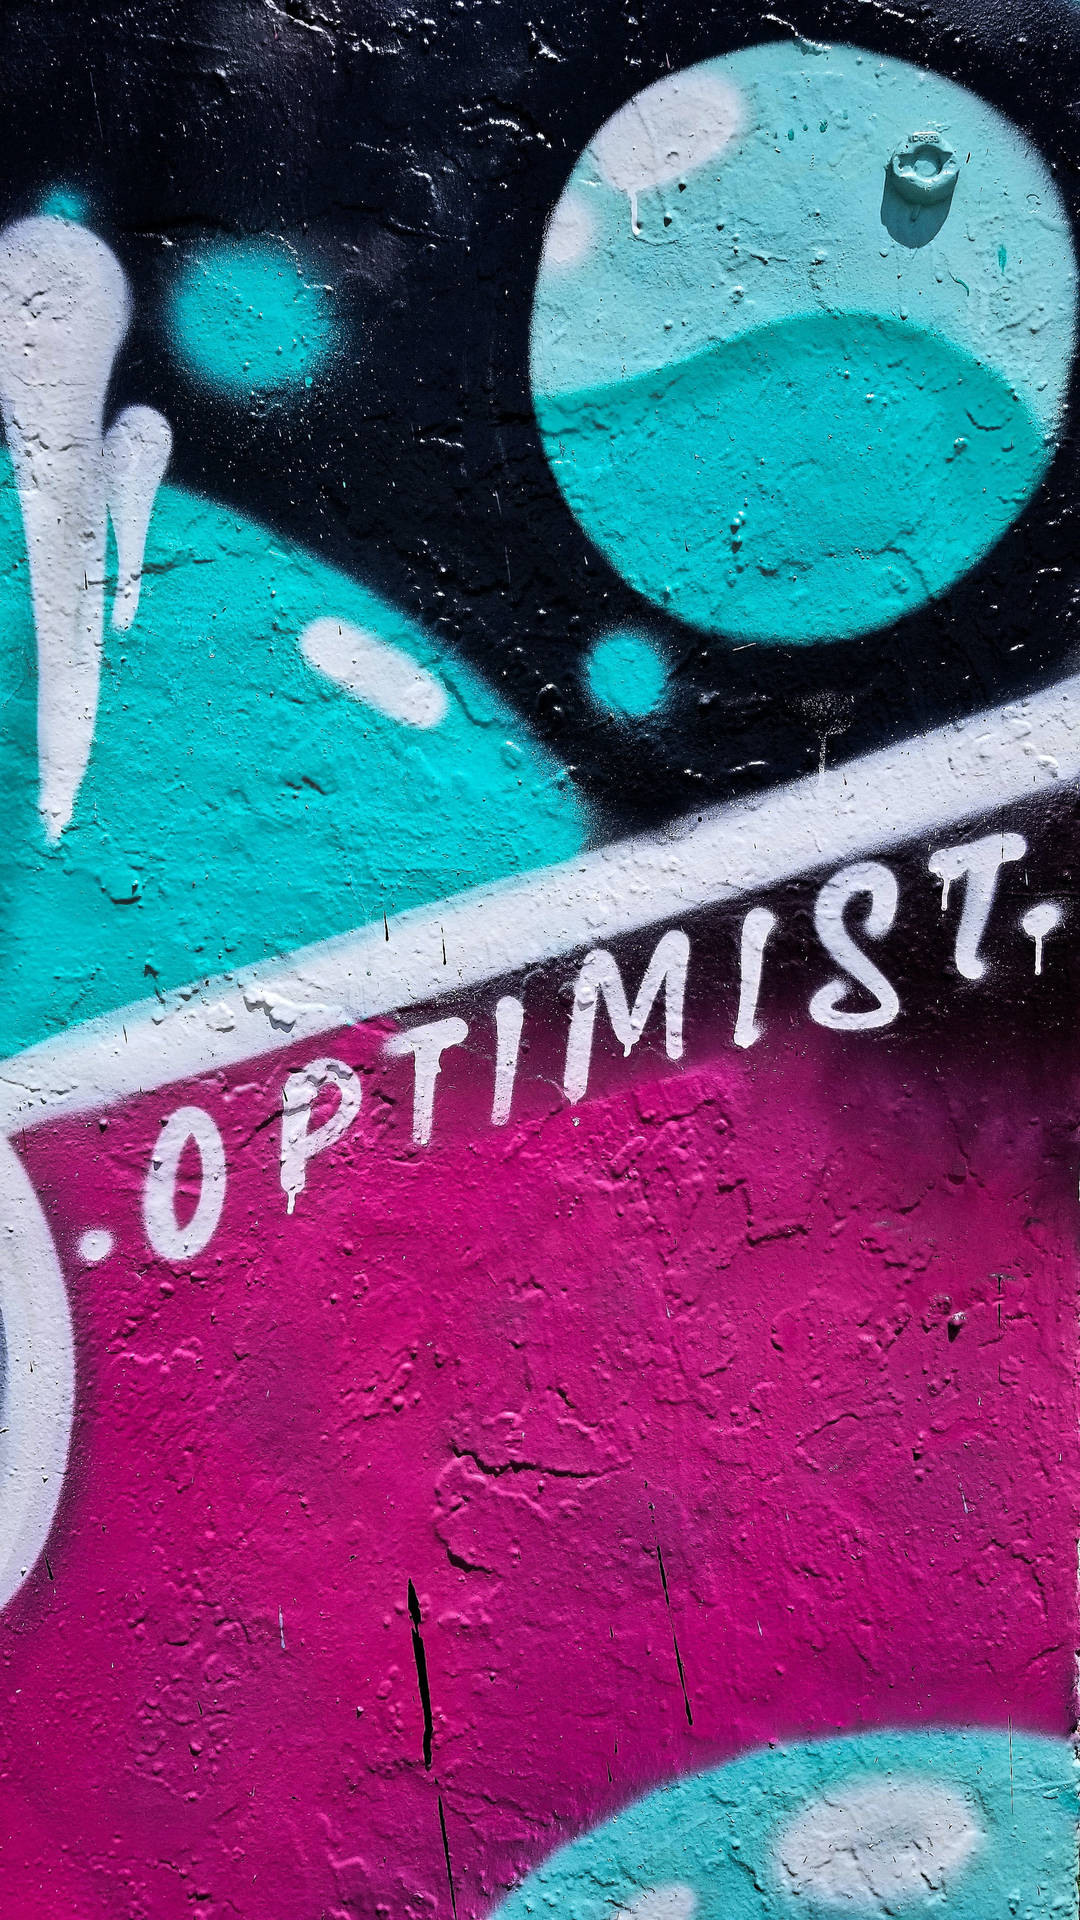 Optimist Abstract Wall Graffiti Iphone